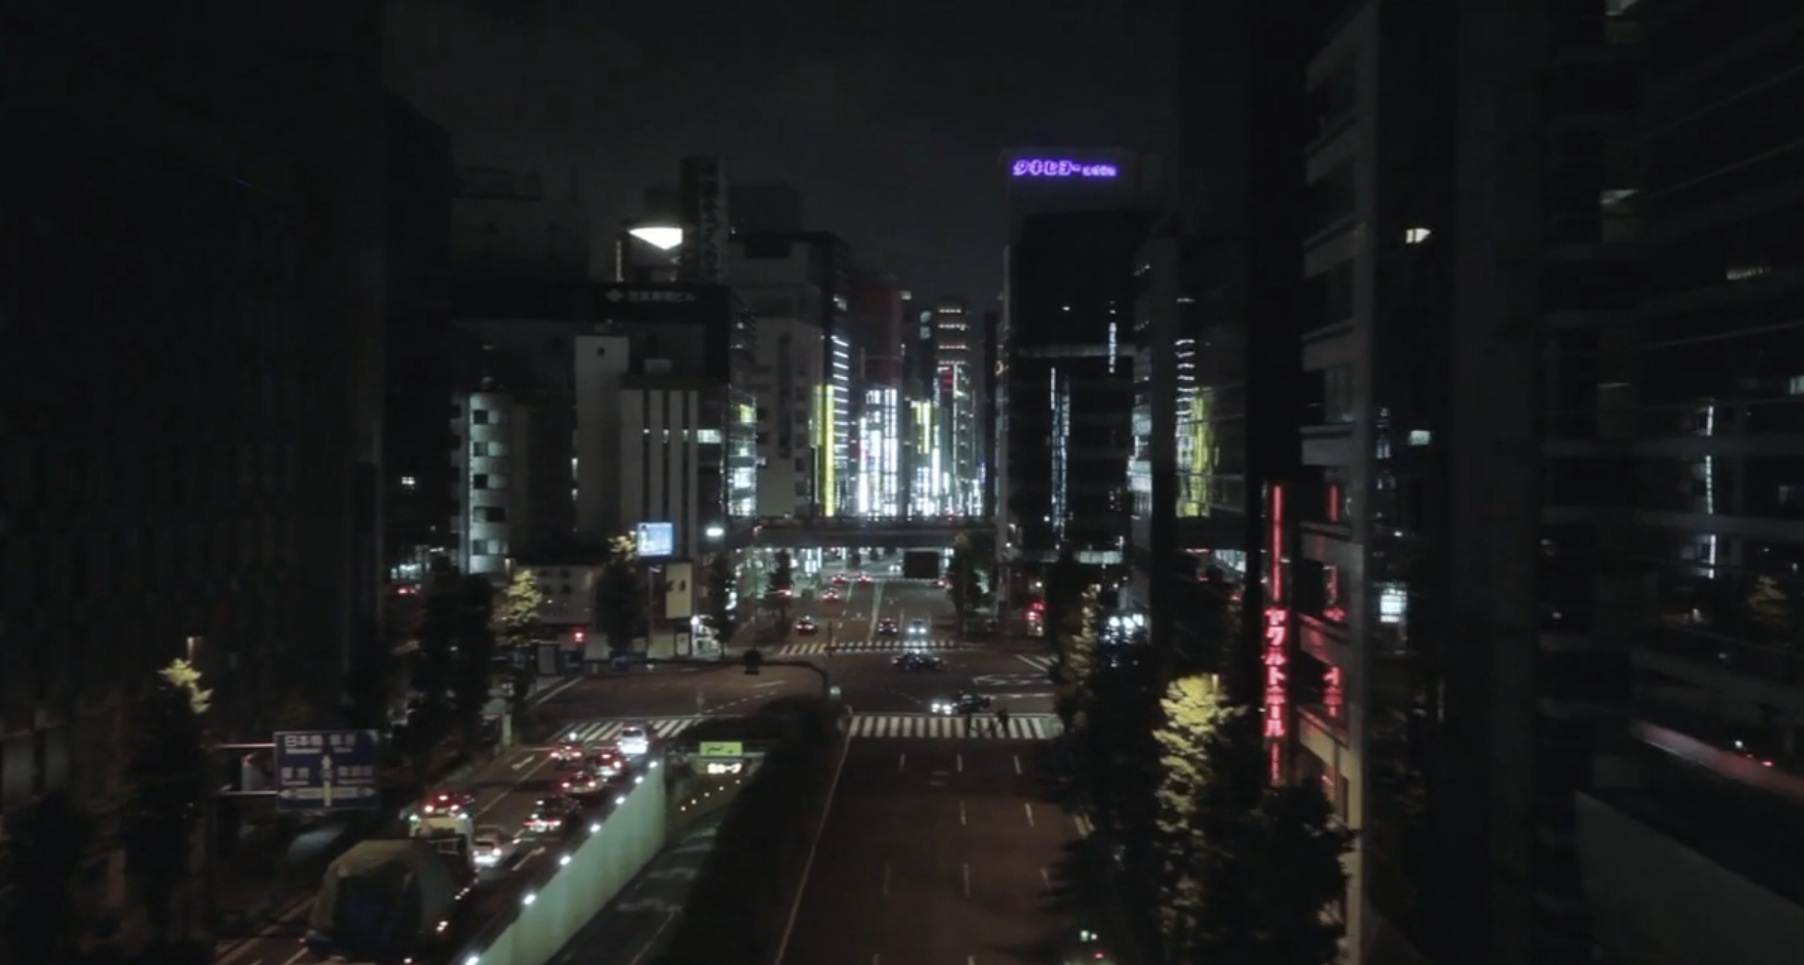 Yamaha -The Dark Side of Japan